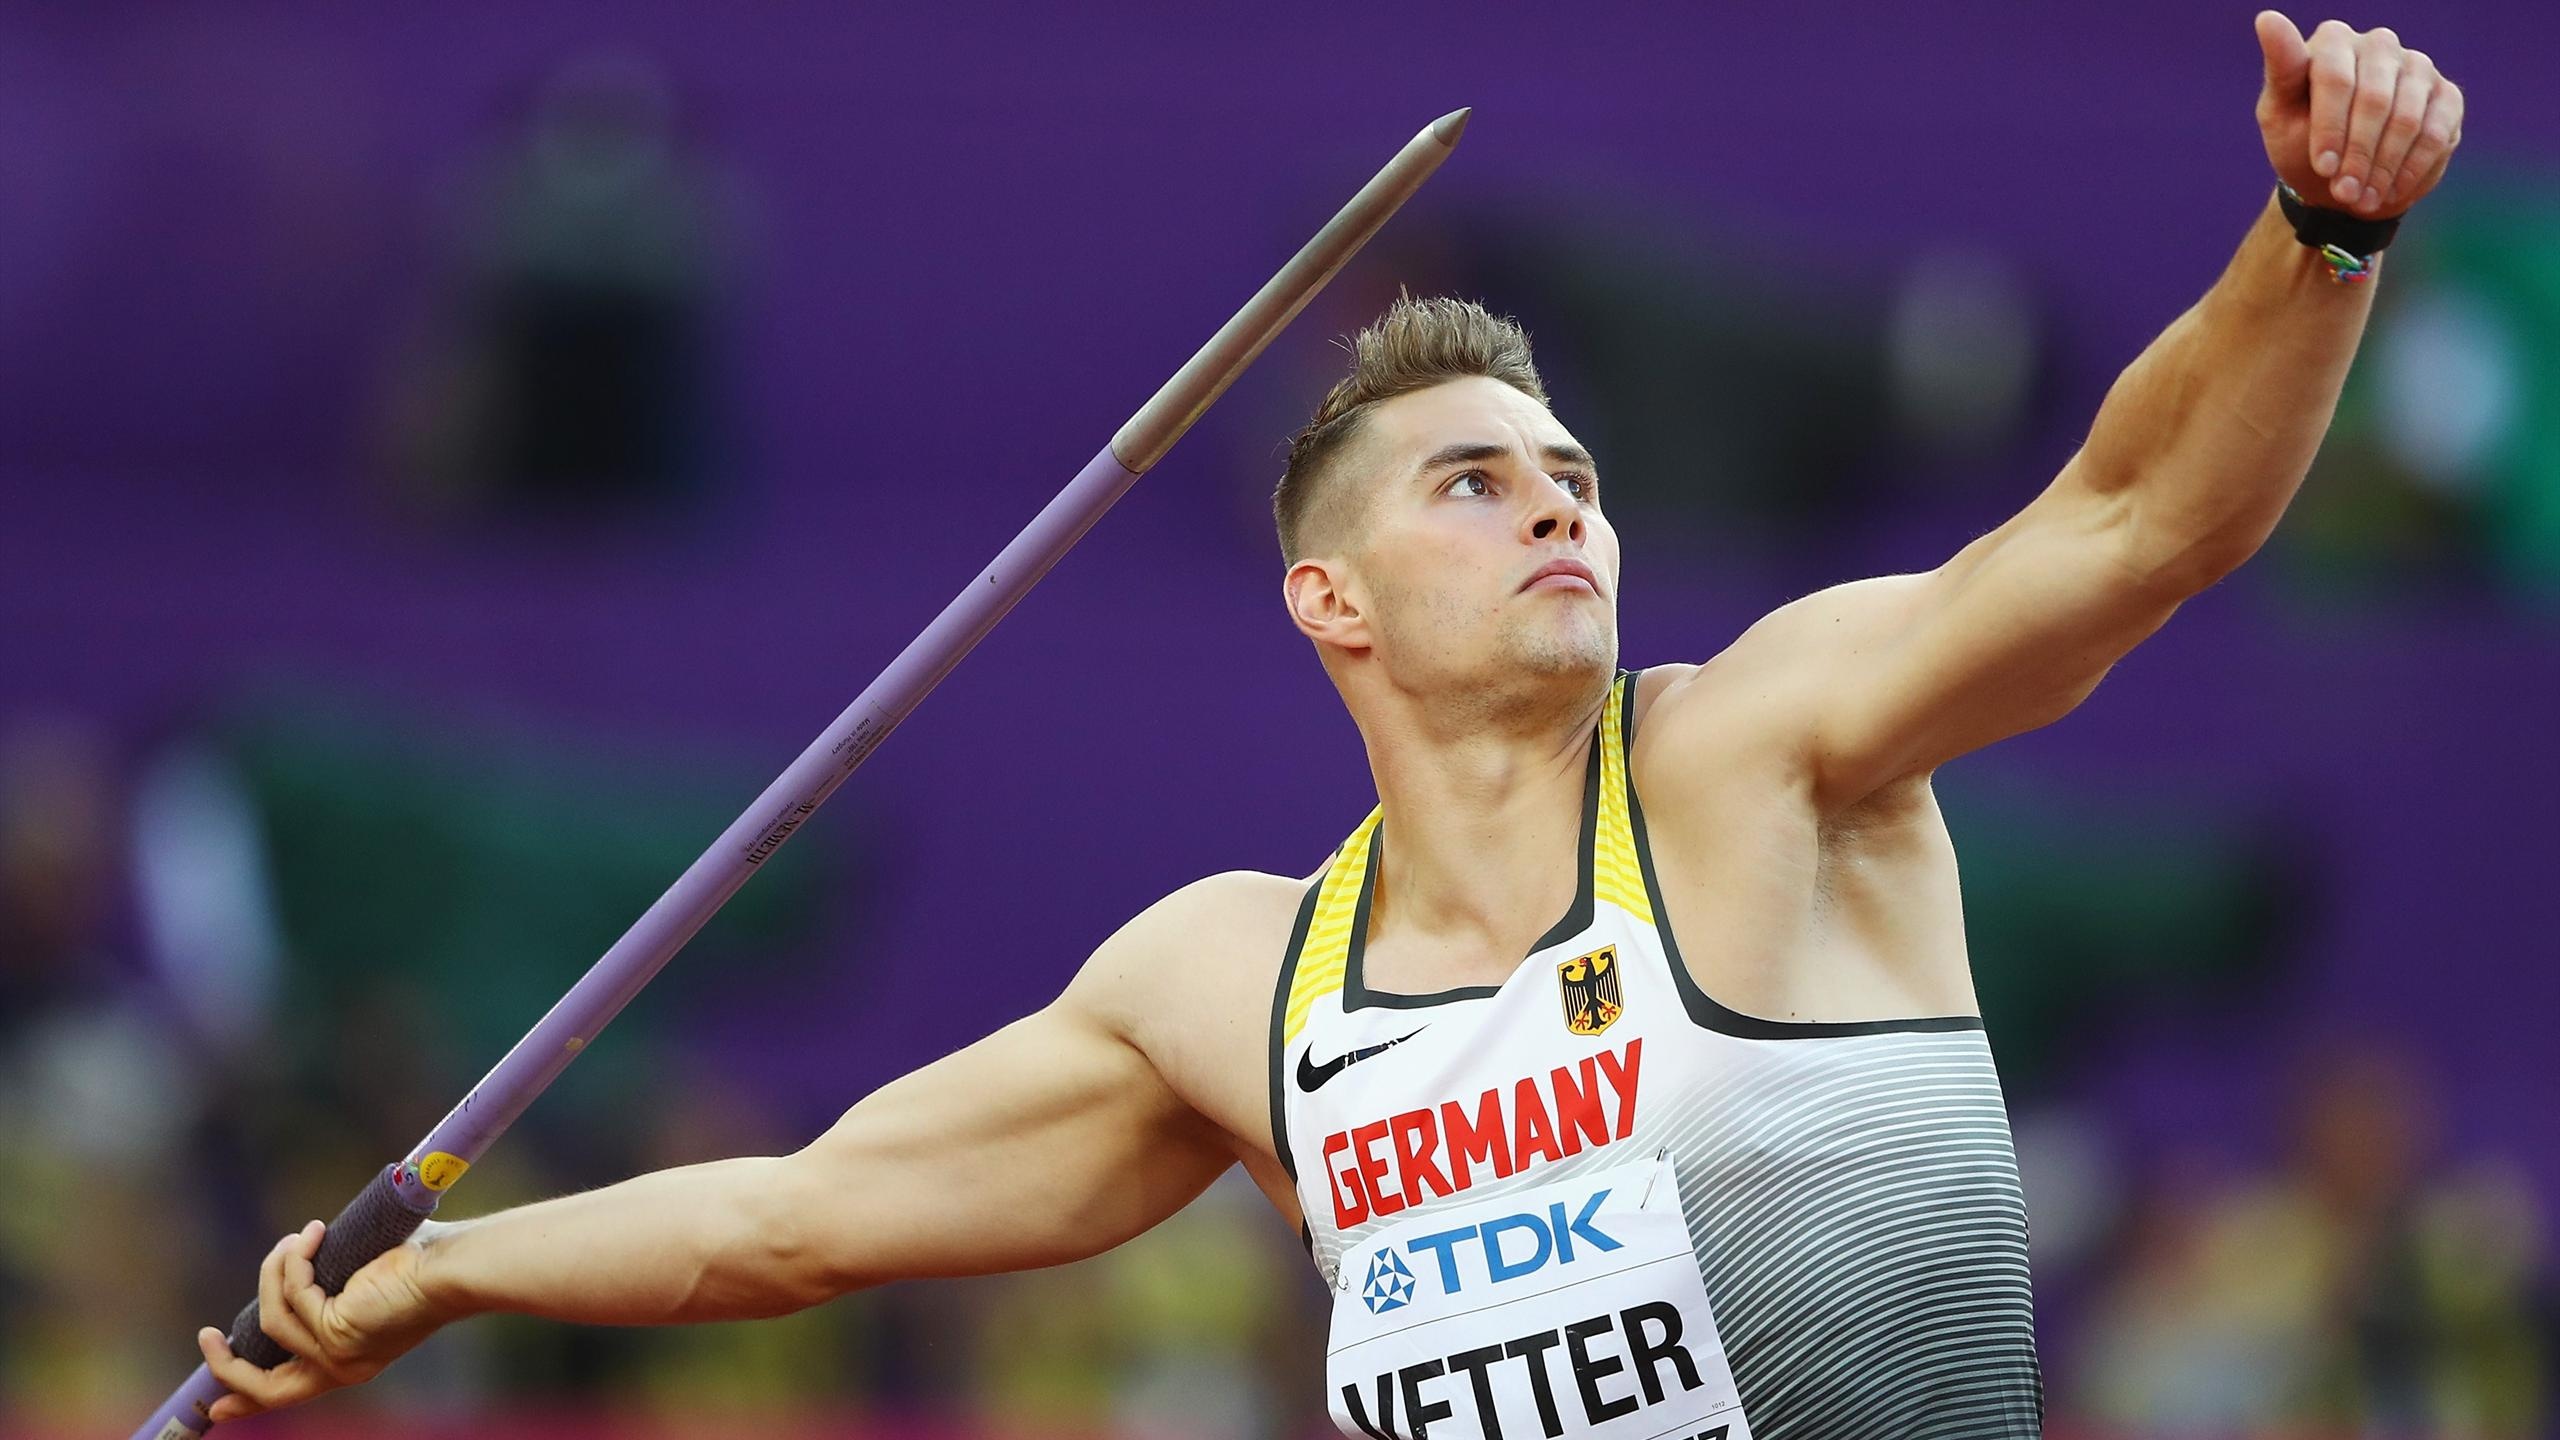 Johannes Vetter, Javelin throw, German athlete, Showdown, 2560x1440 HD Desktop